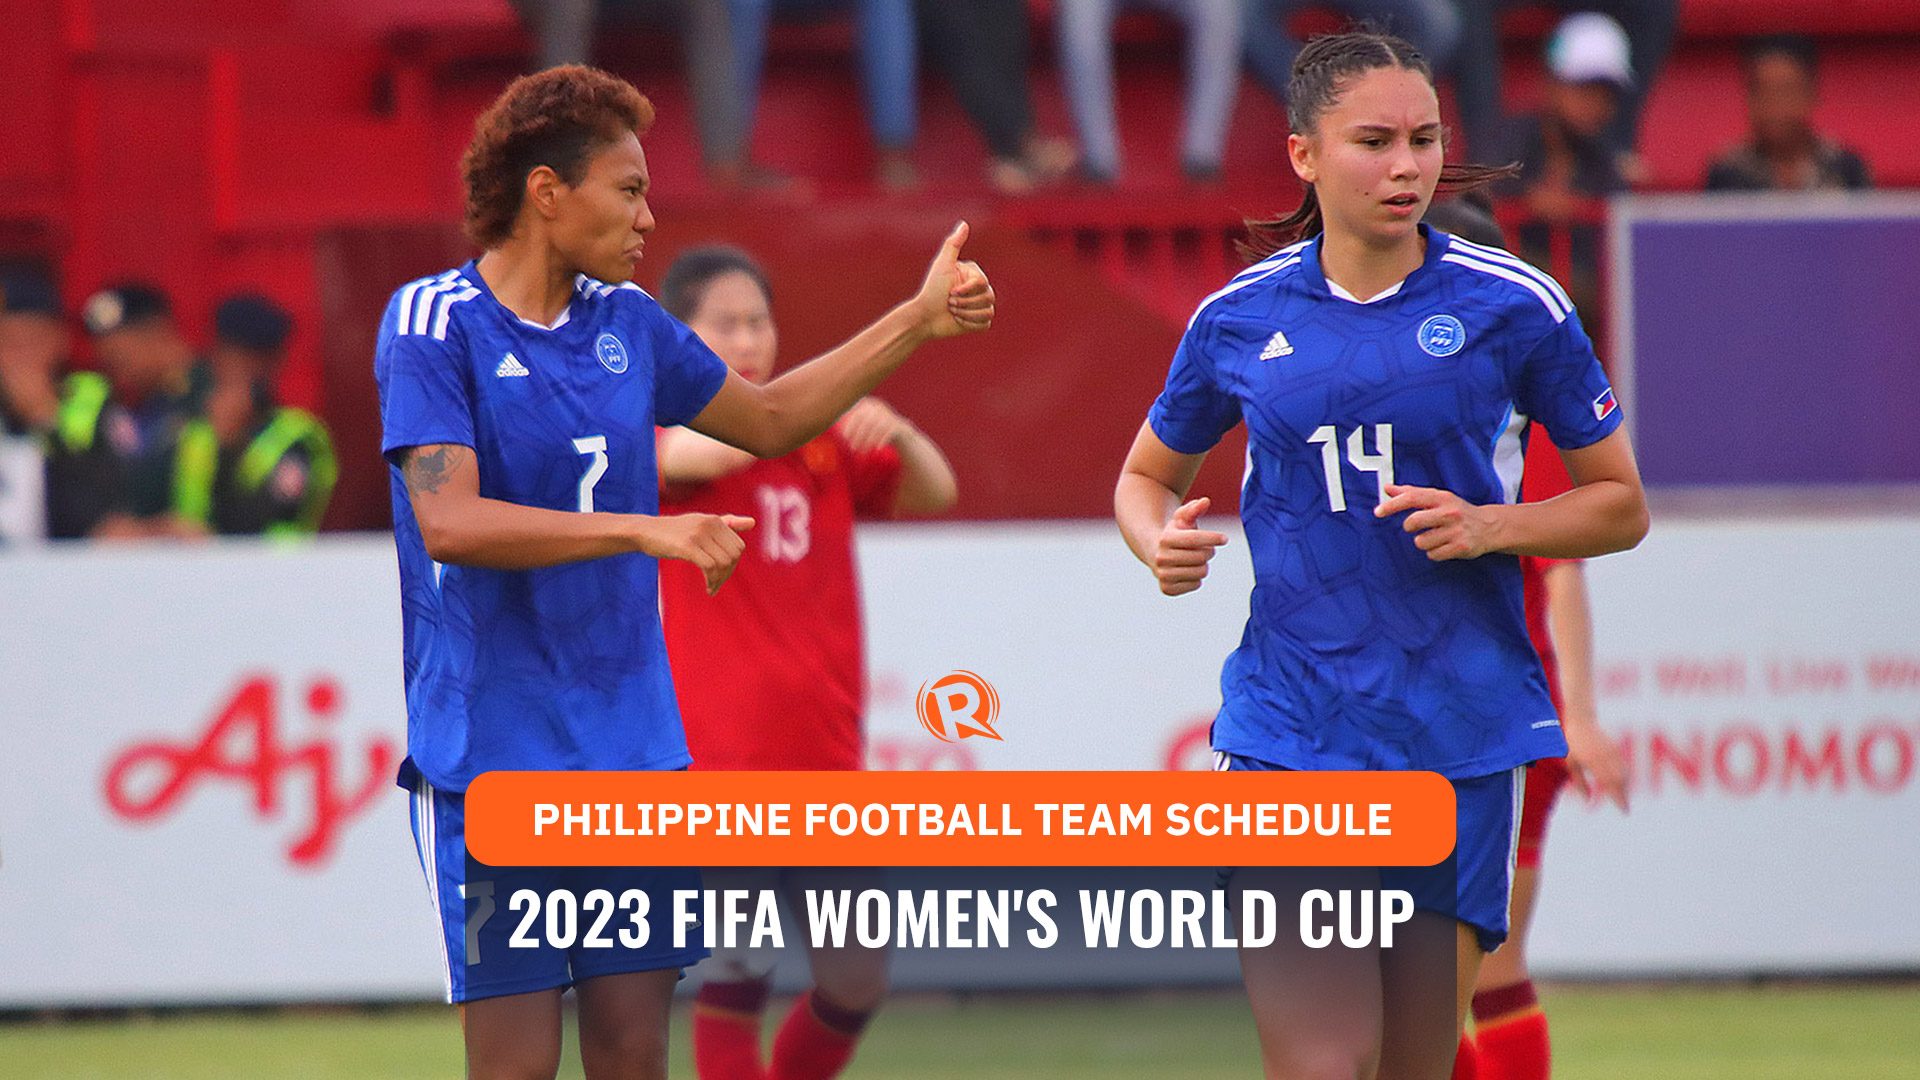 FIFA Women's World Cup Philippine team schedule, how to watch